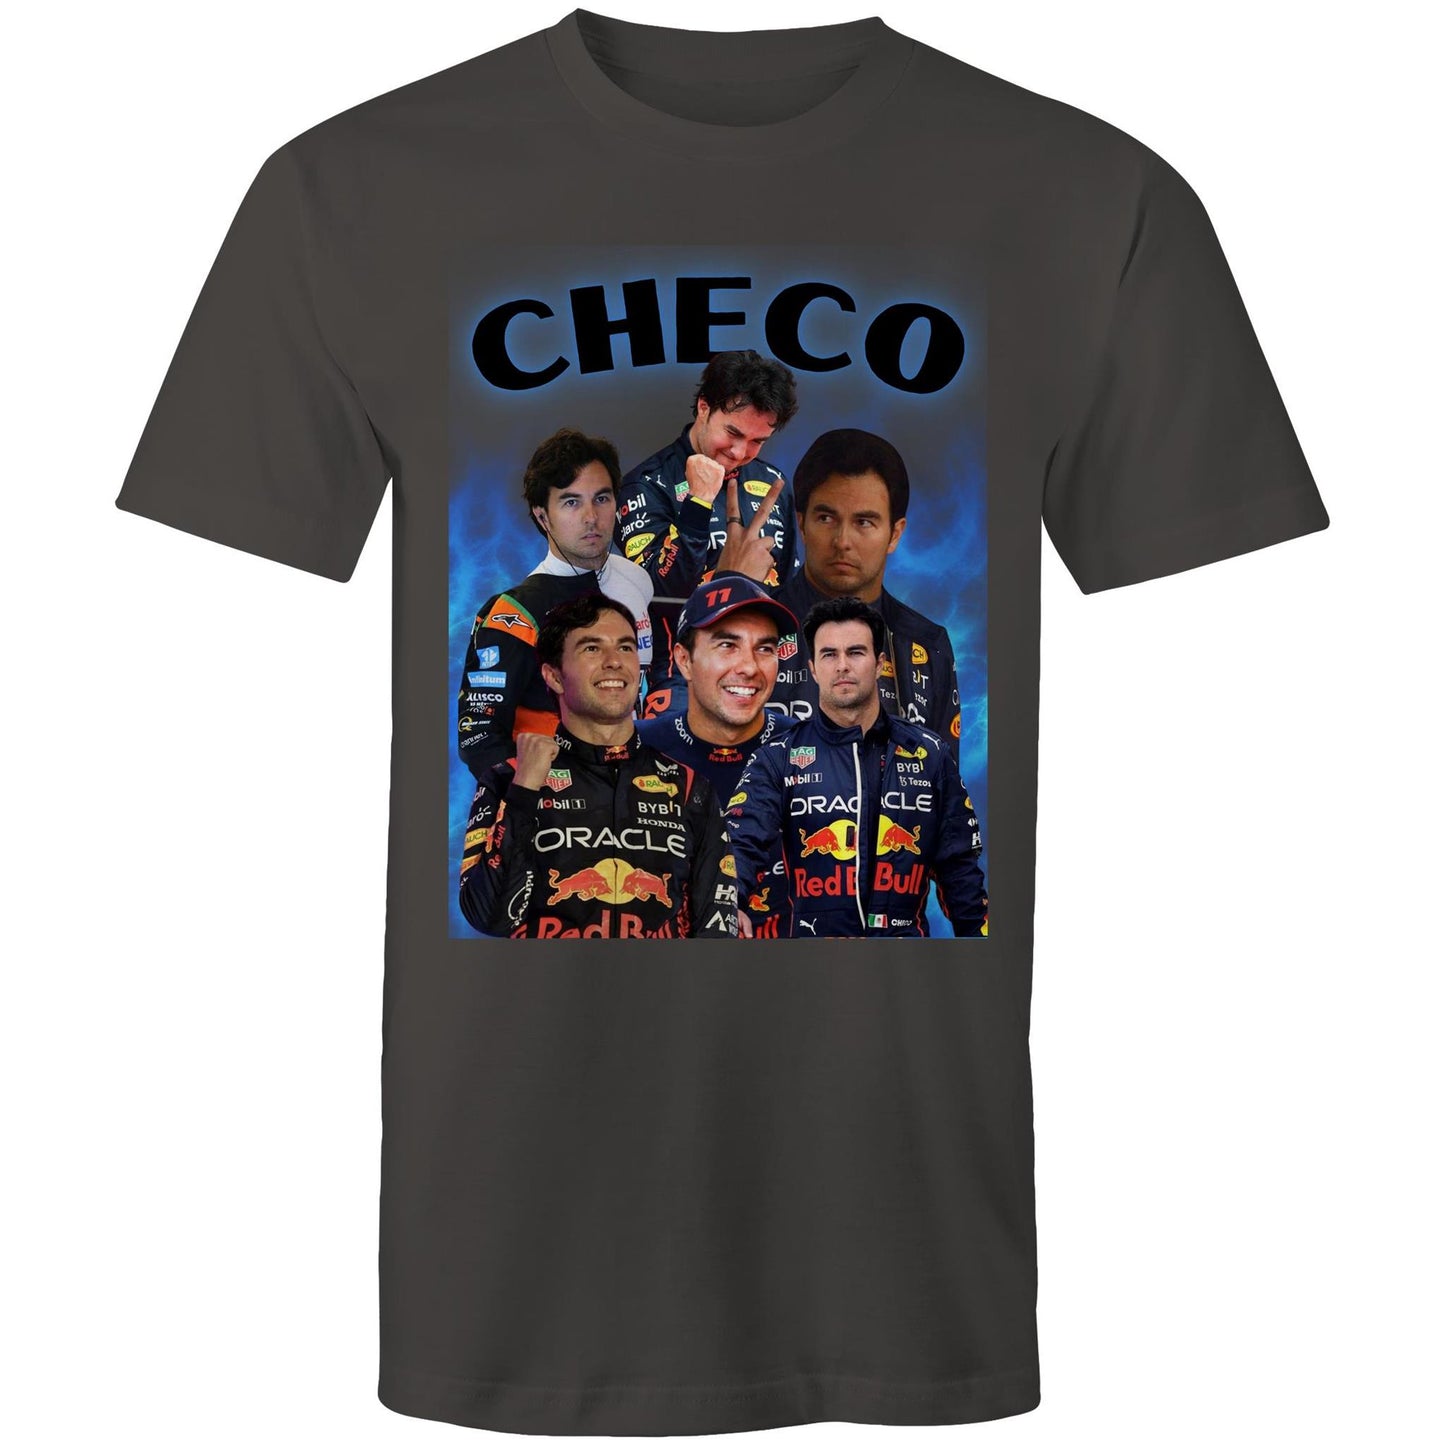 Checo Vintage T-Shirt